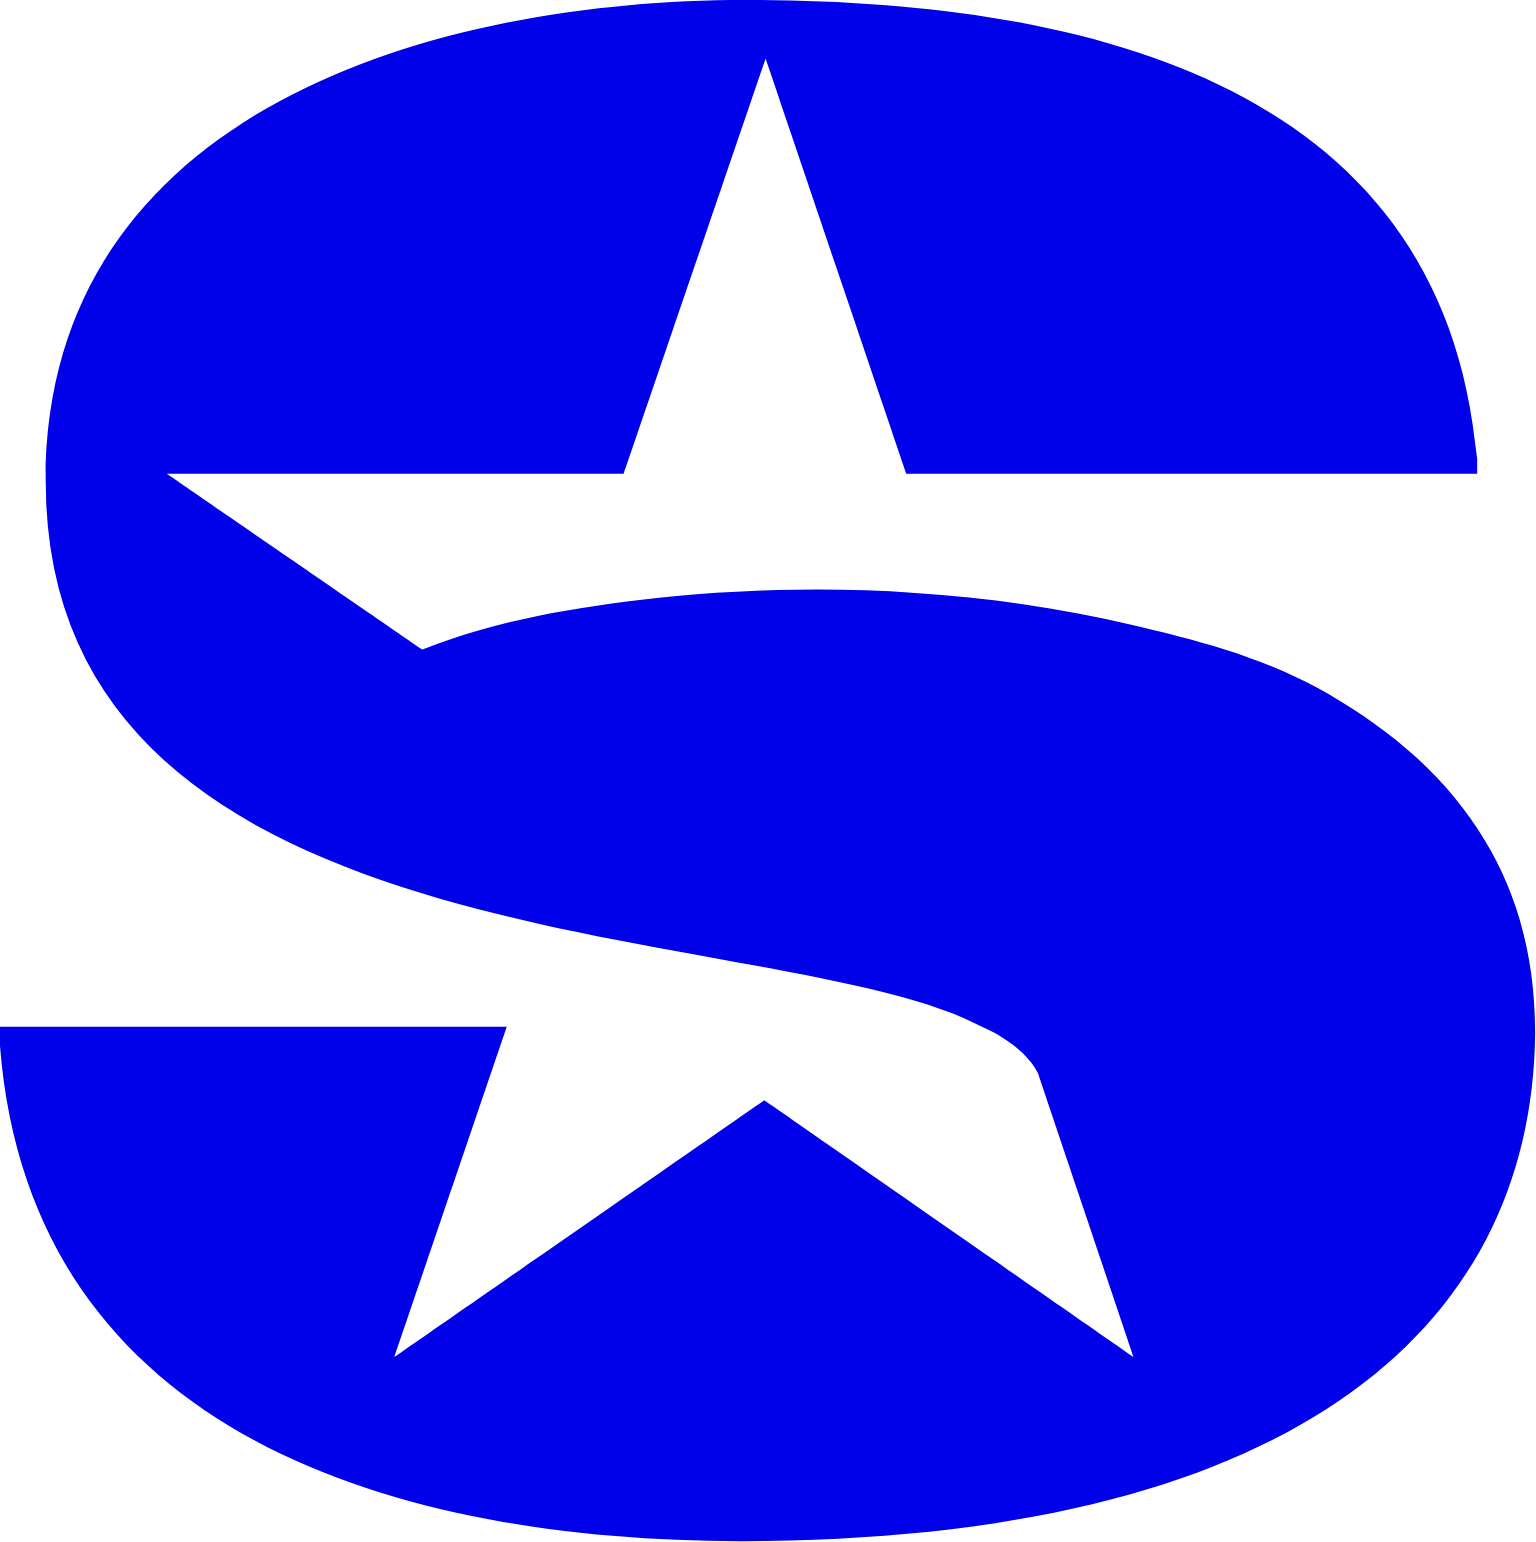 Sirius XM logo (transparent PNG)